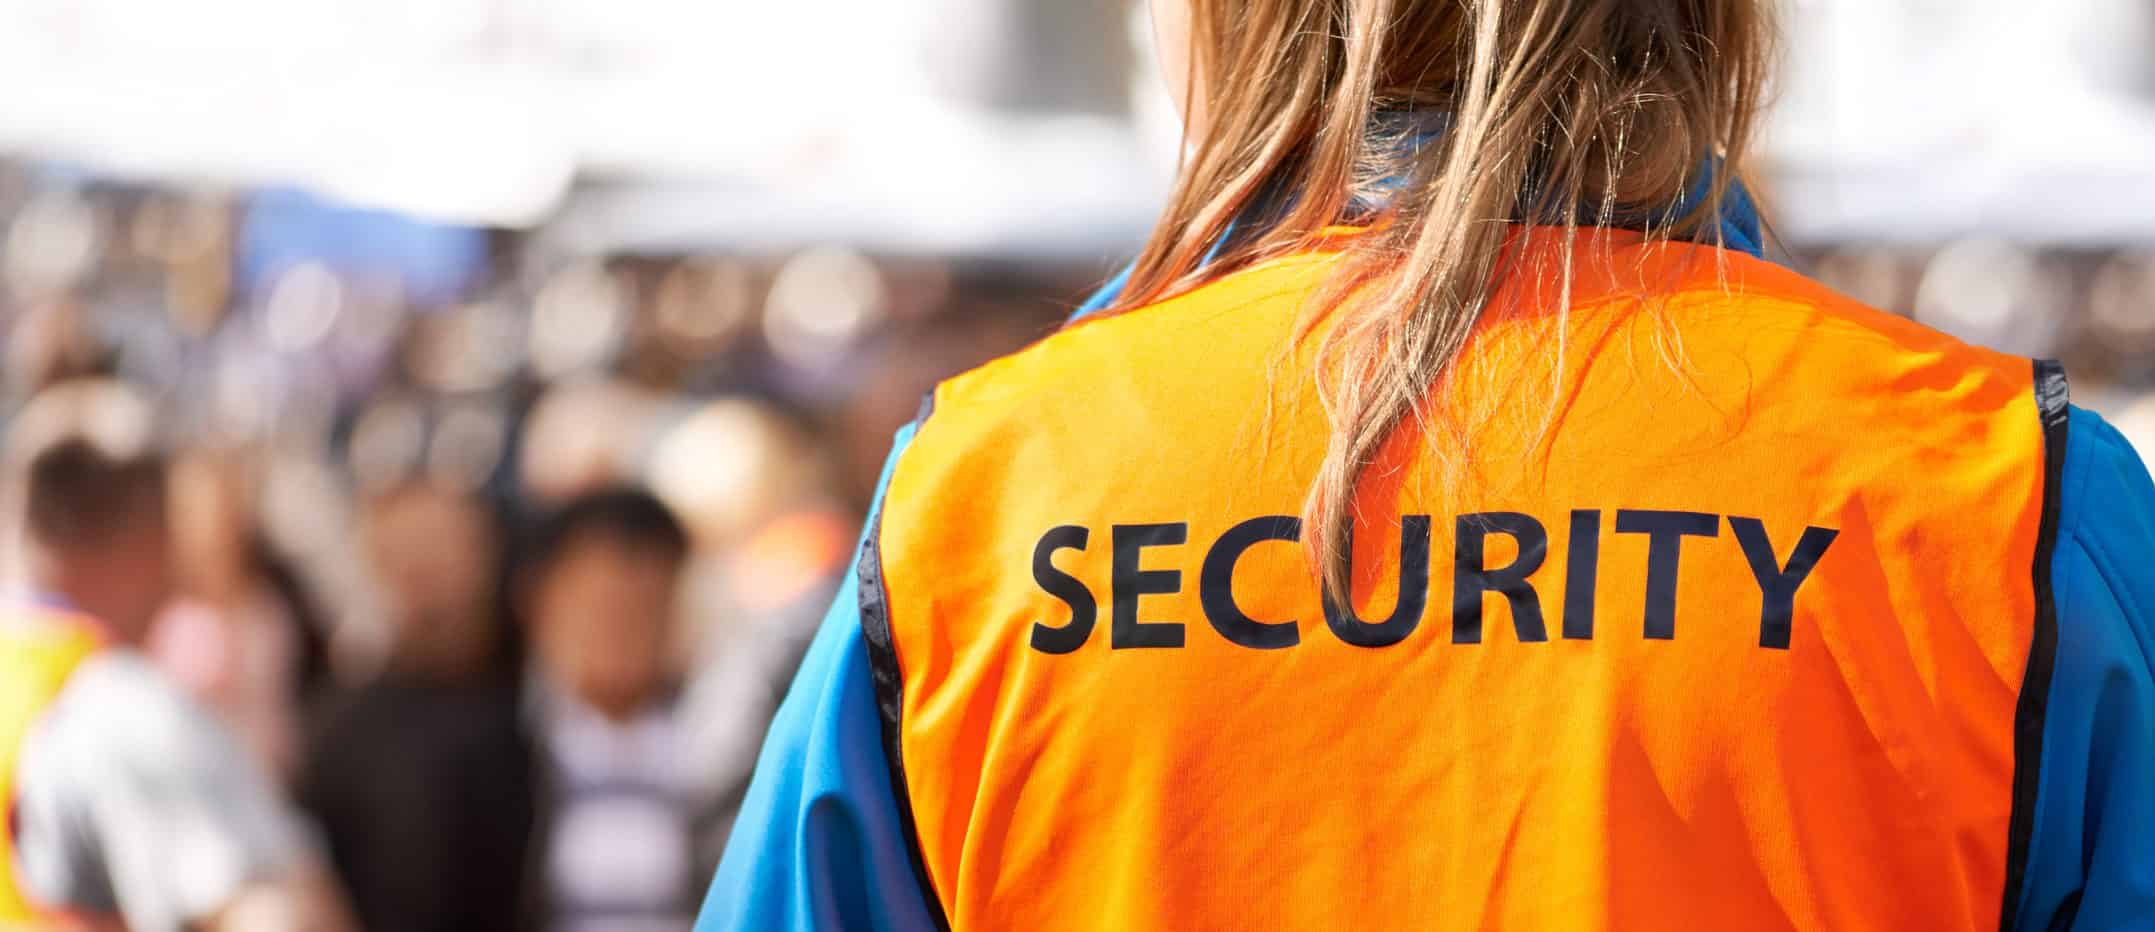 security with orange vest